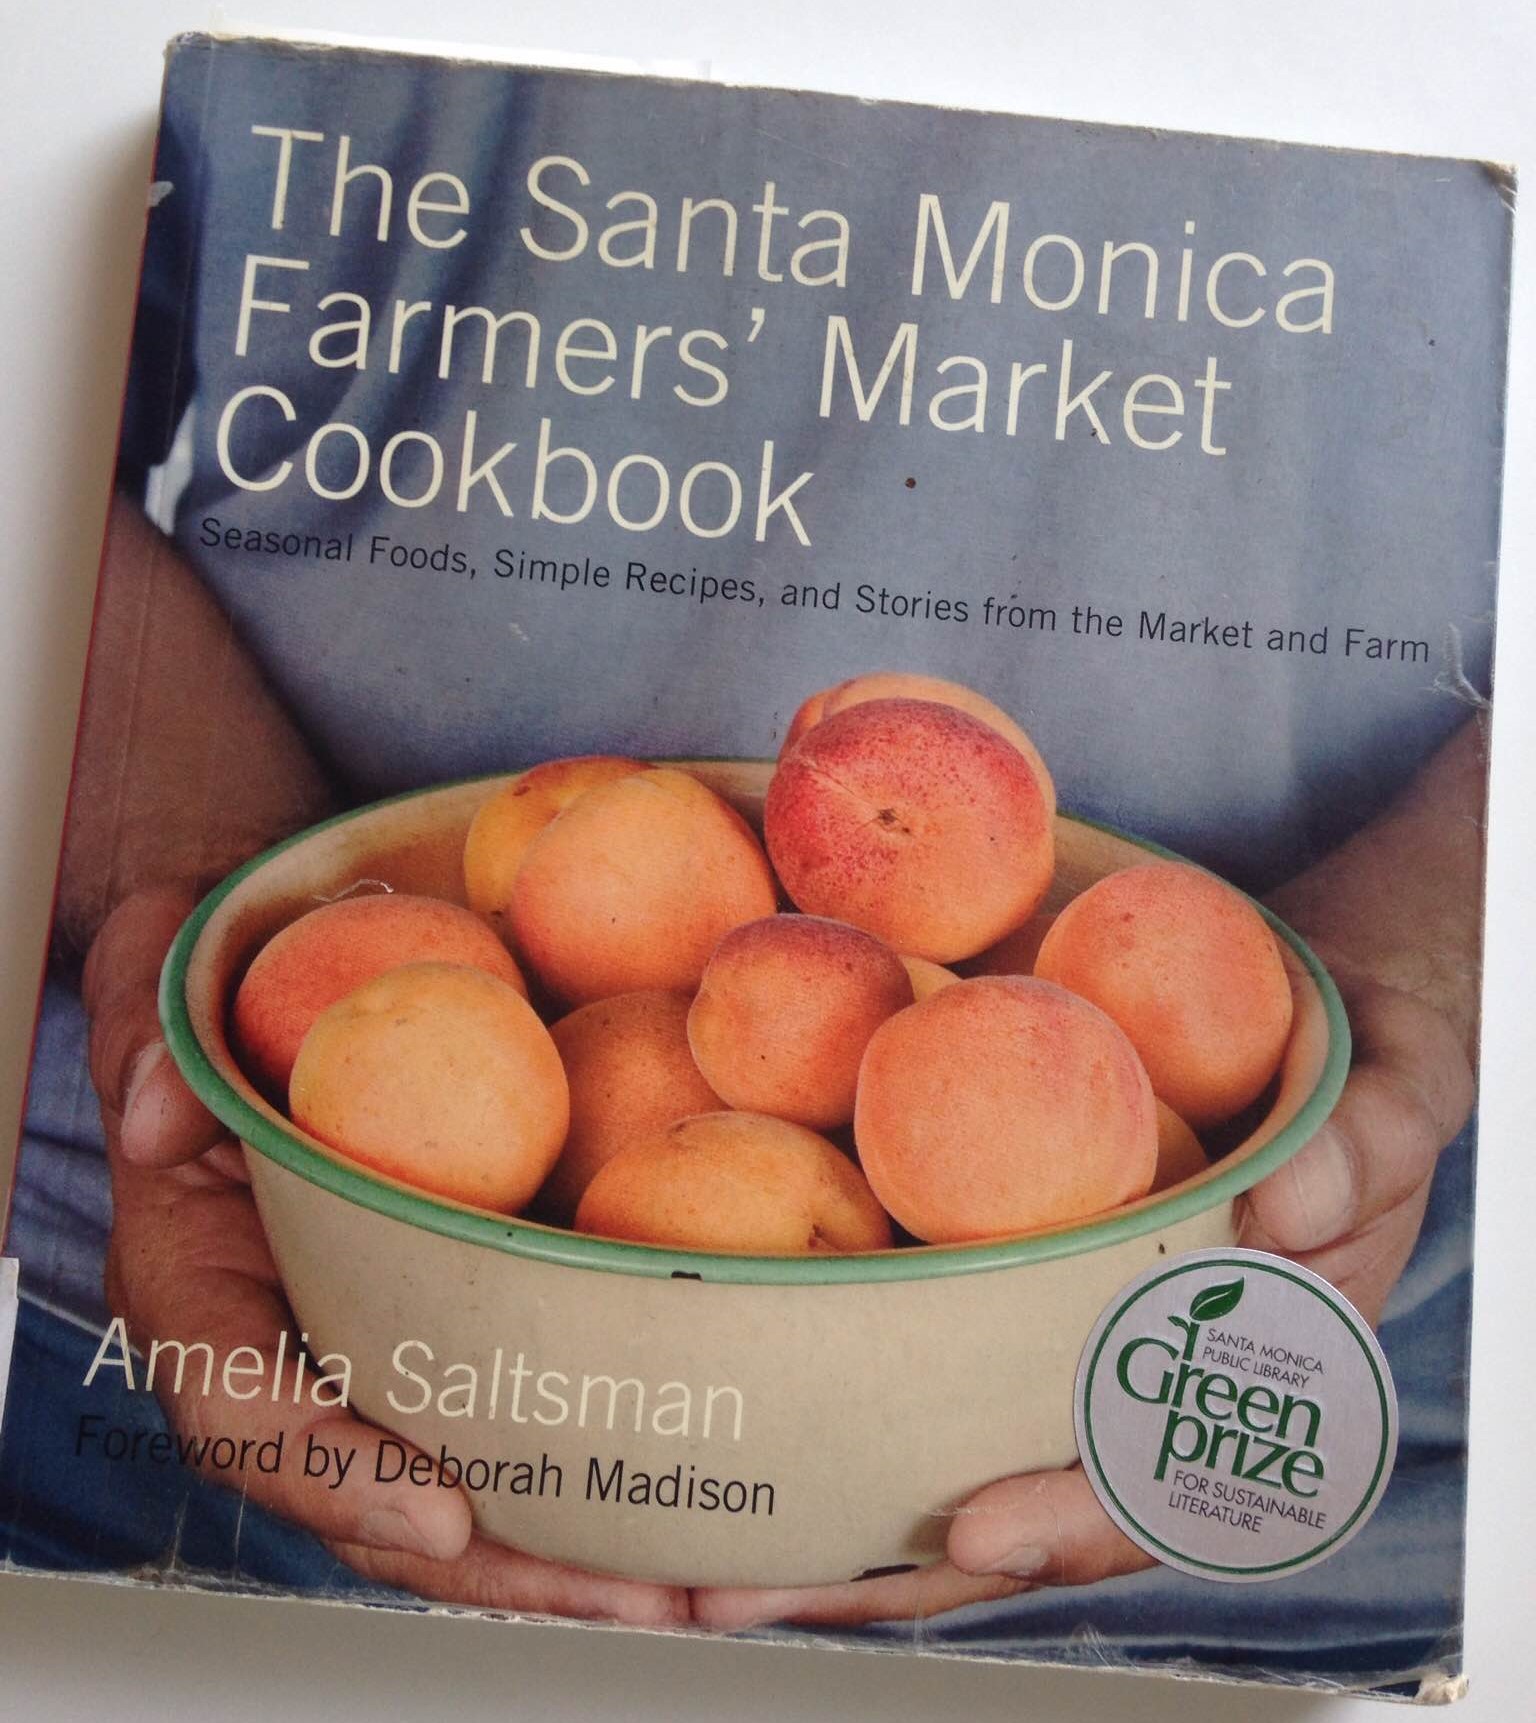 the cookbook The Santa Monica Farmers' Market Cookbook by Amelia Saltsman